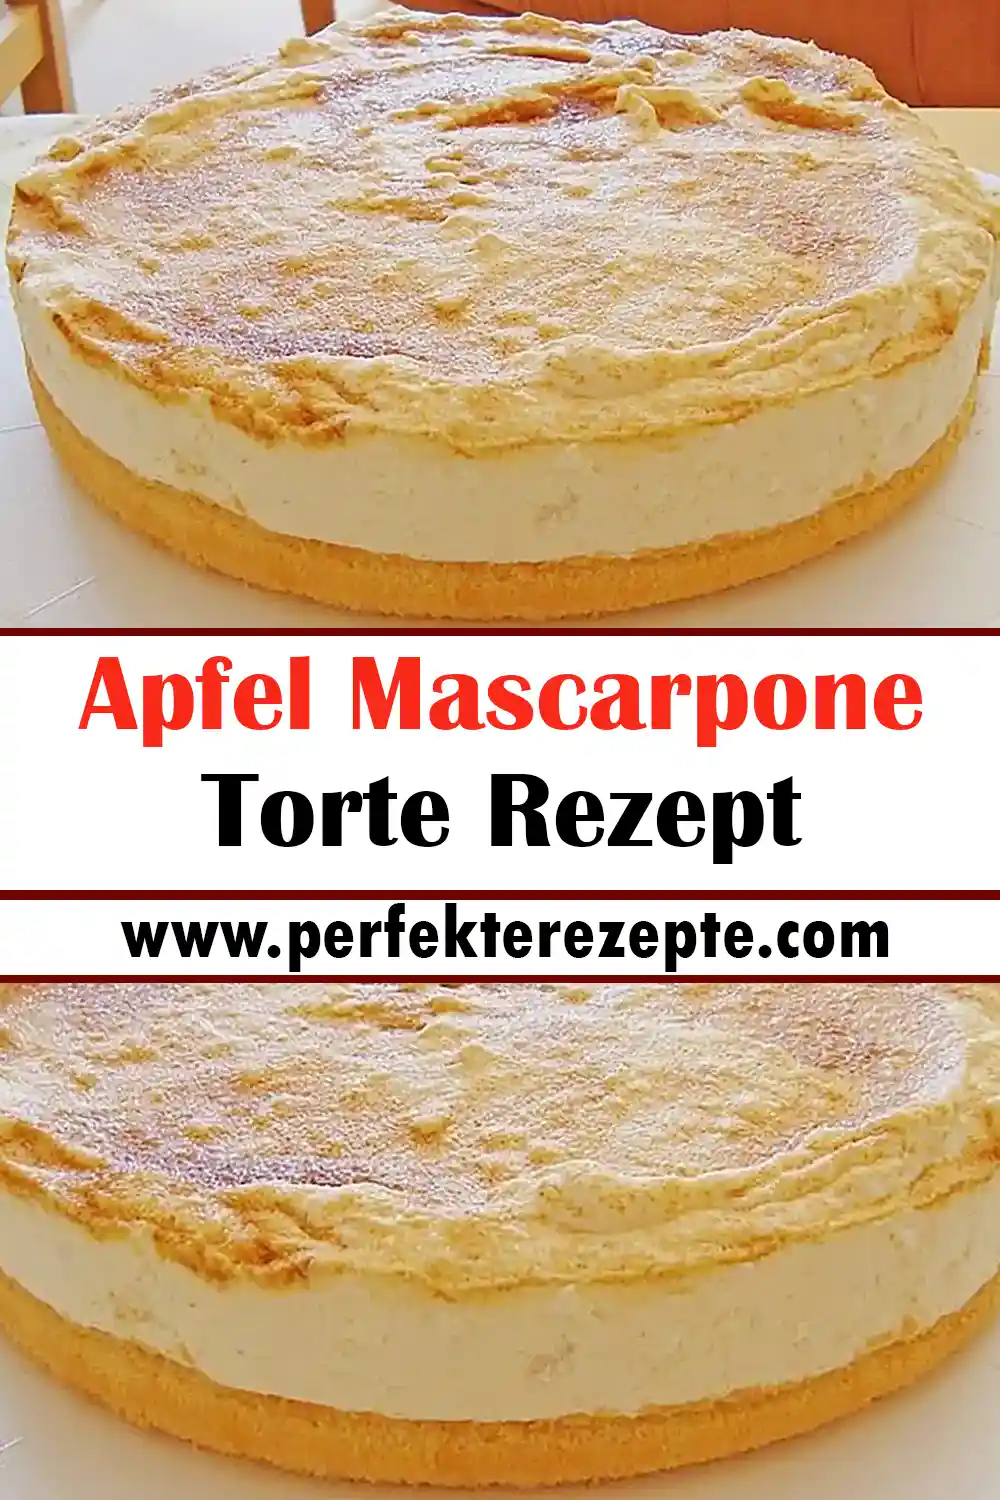 Apfel Mascarpone Torte Rezept